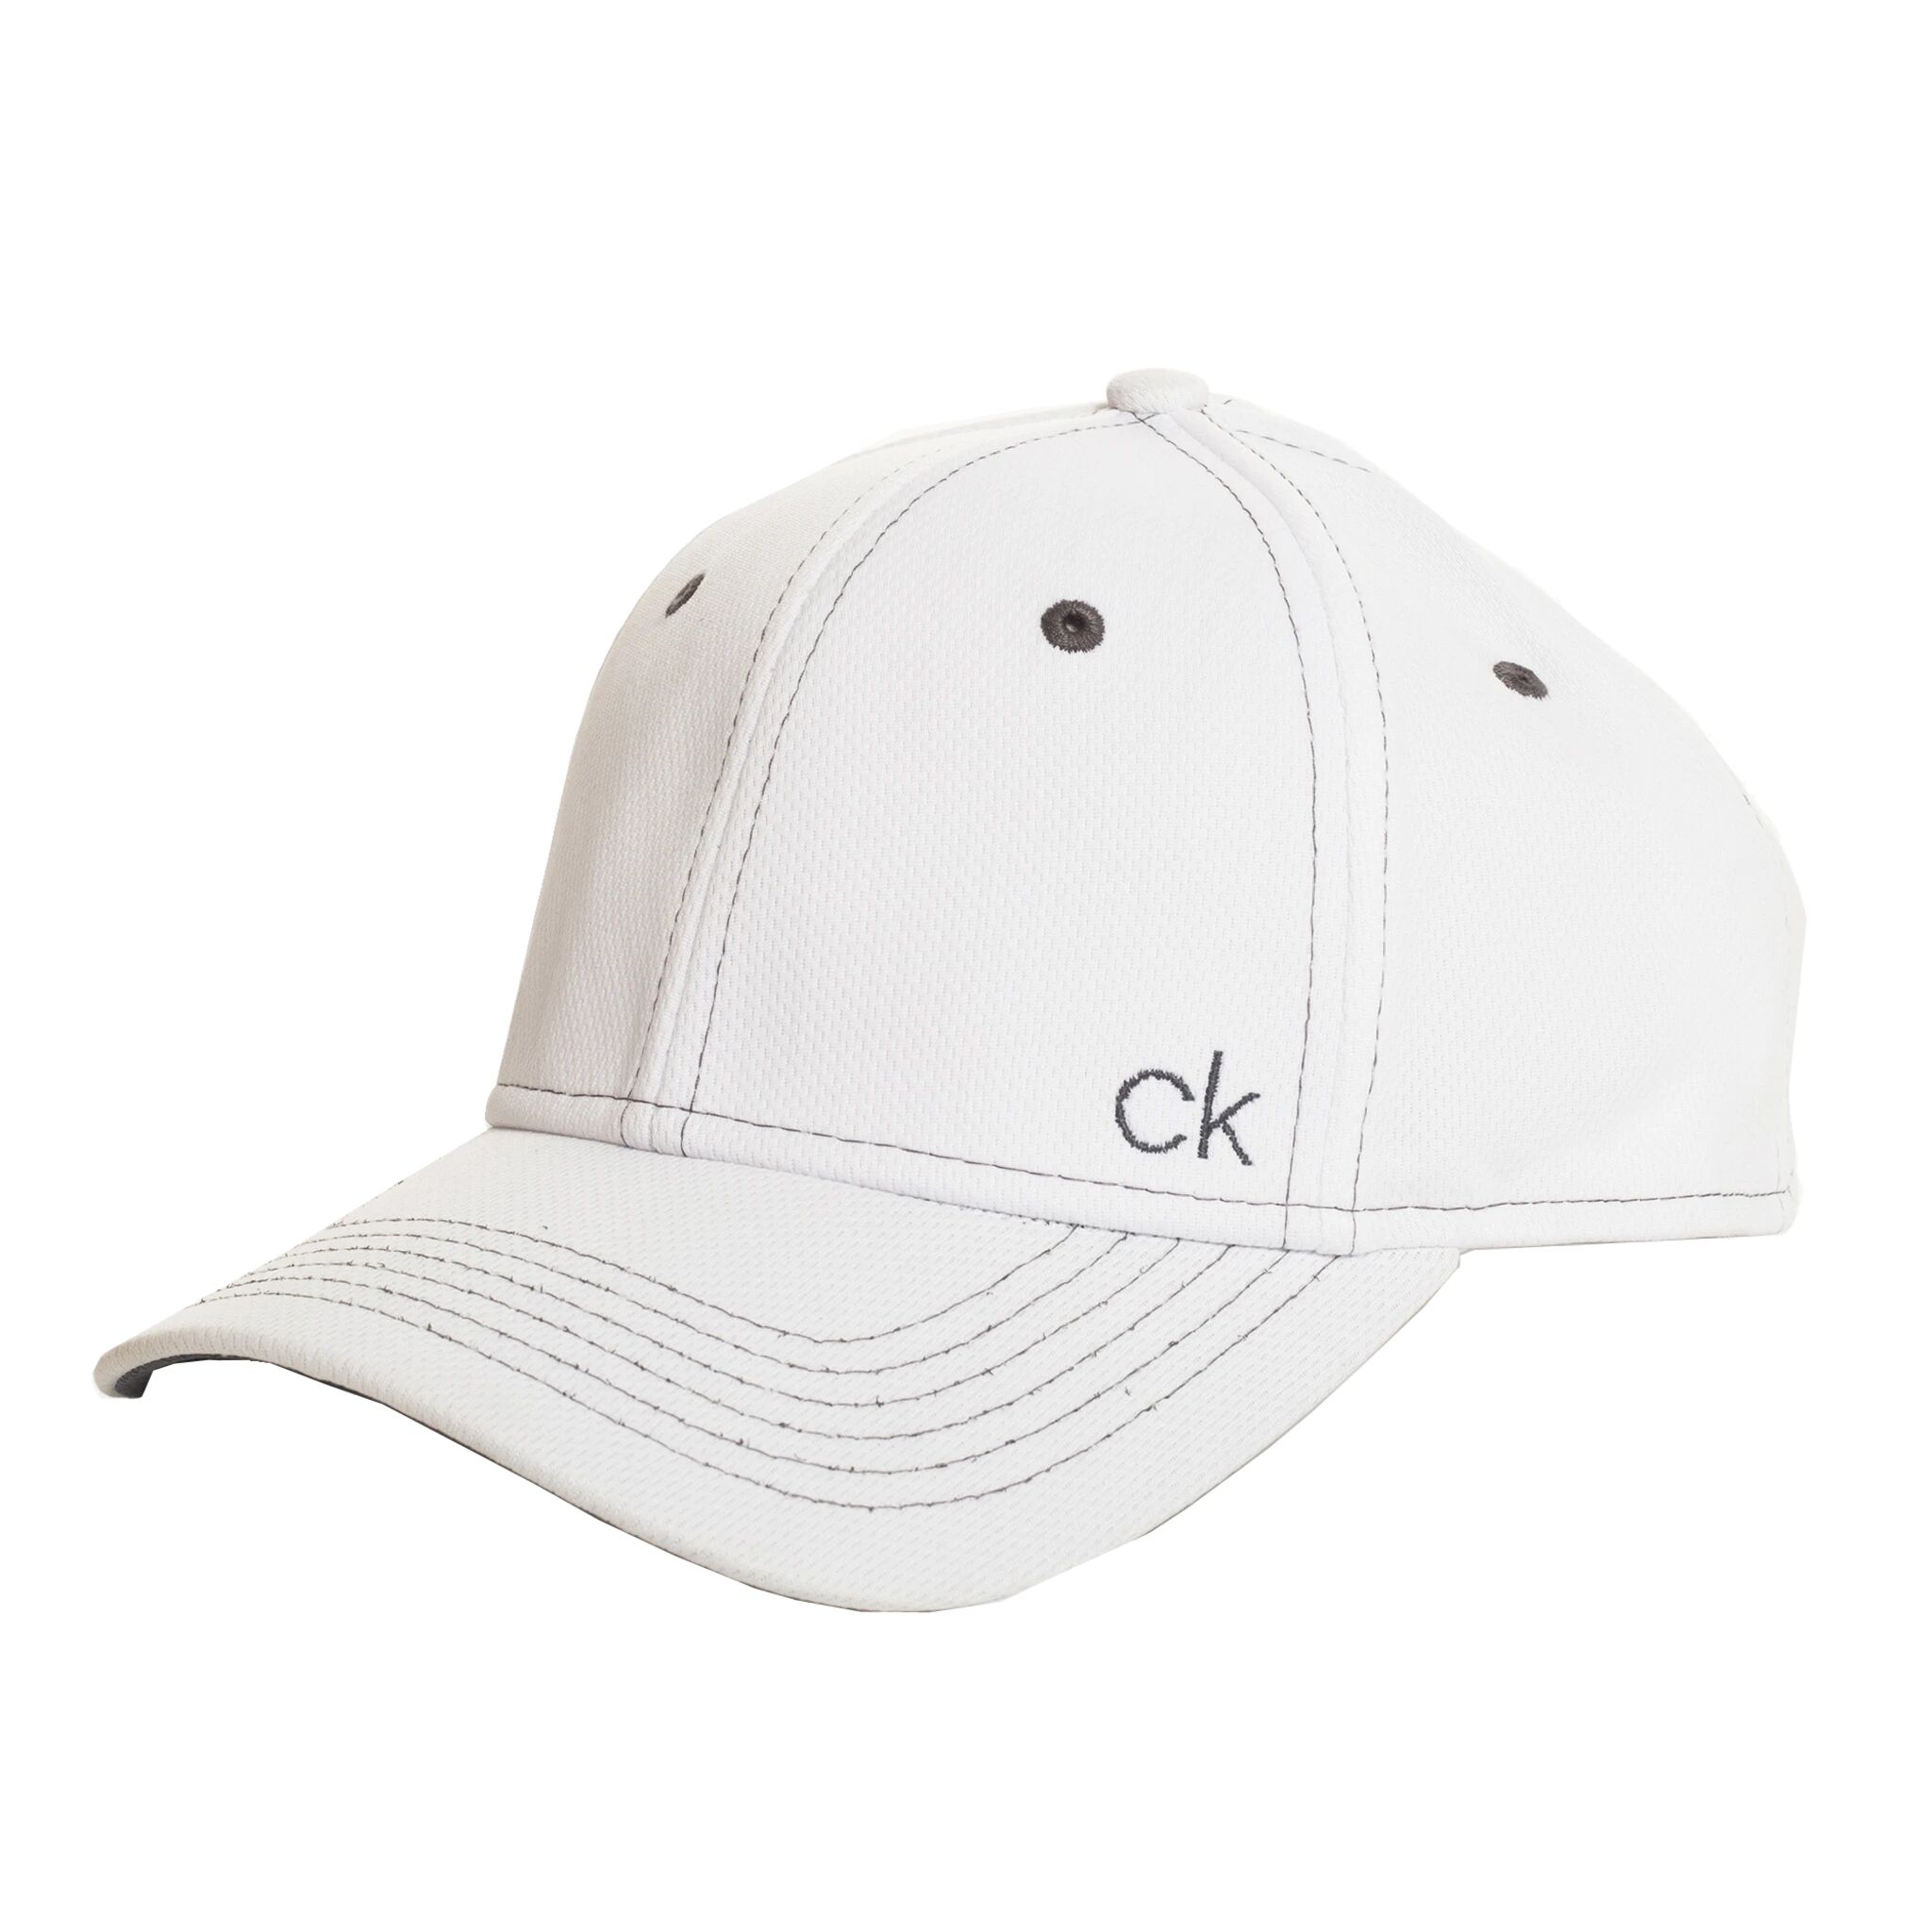 Calvin Performance Mesh Cap, golfcaps One Size White